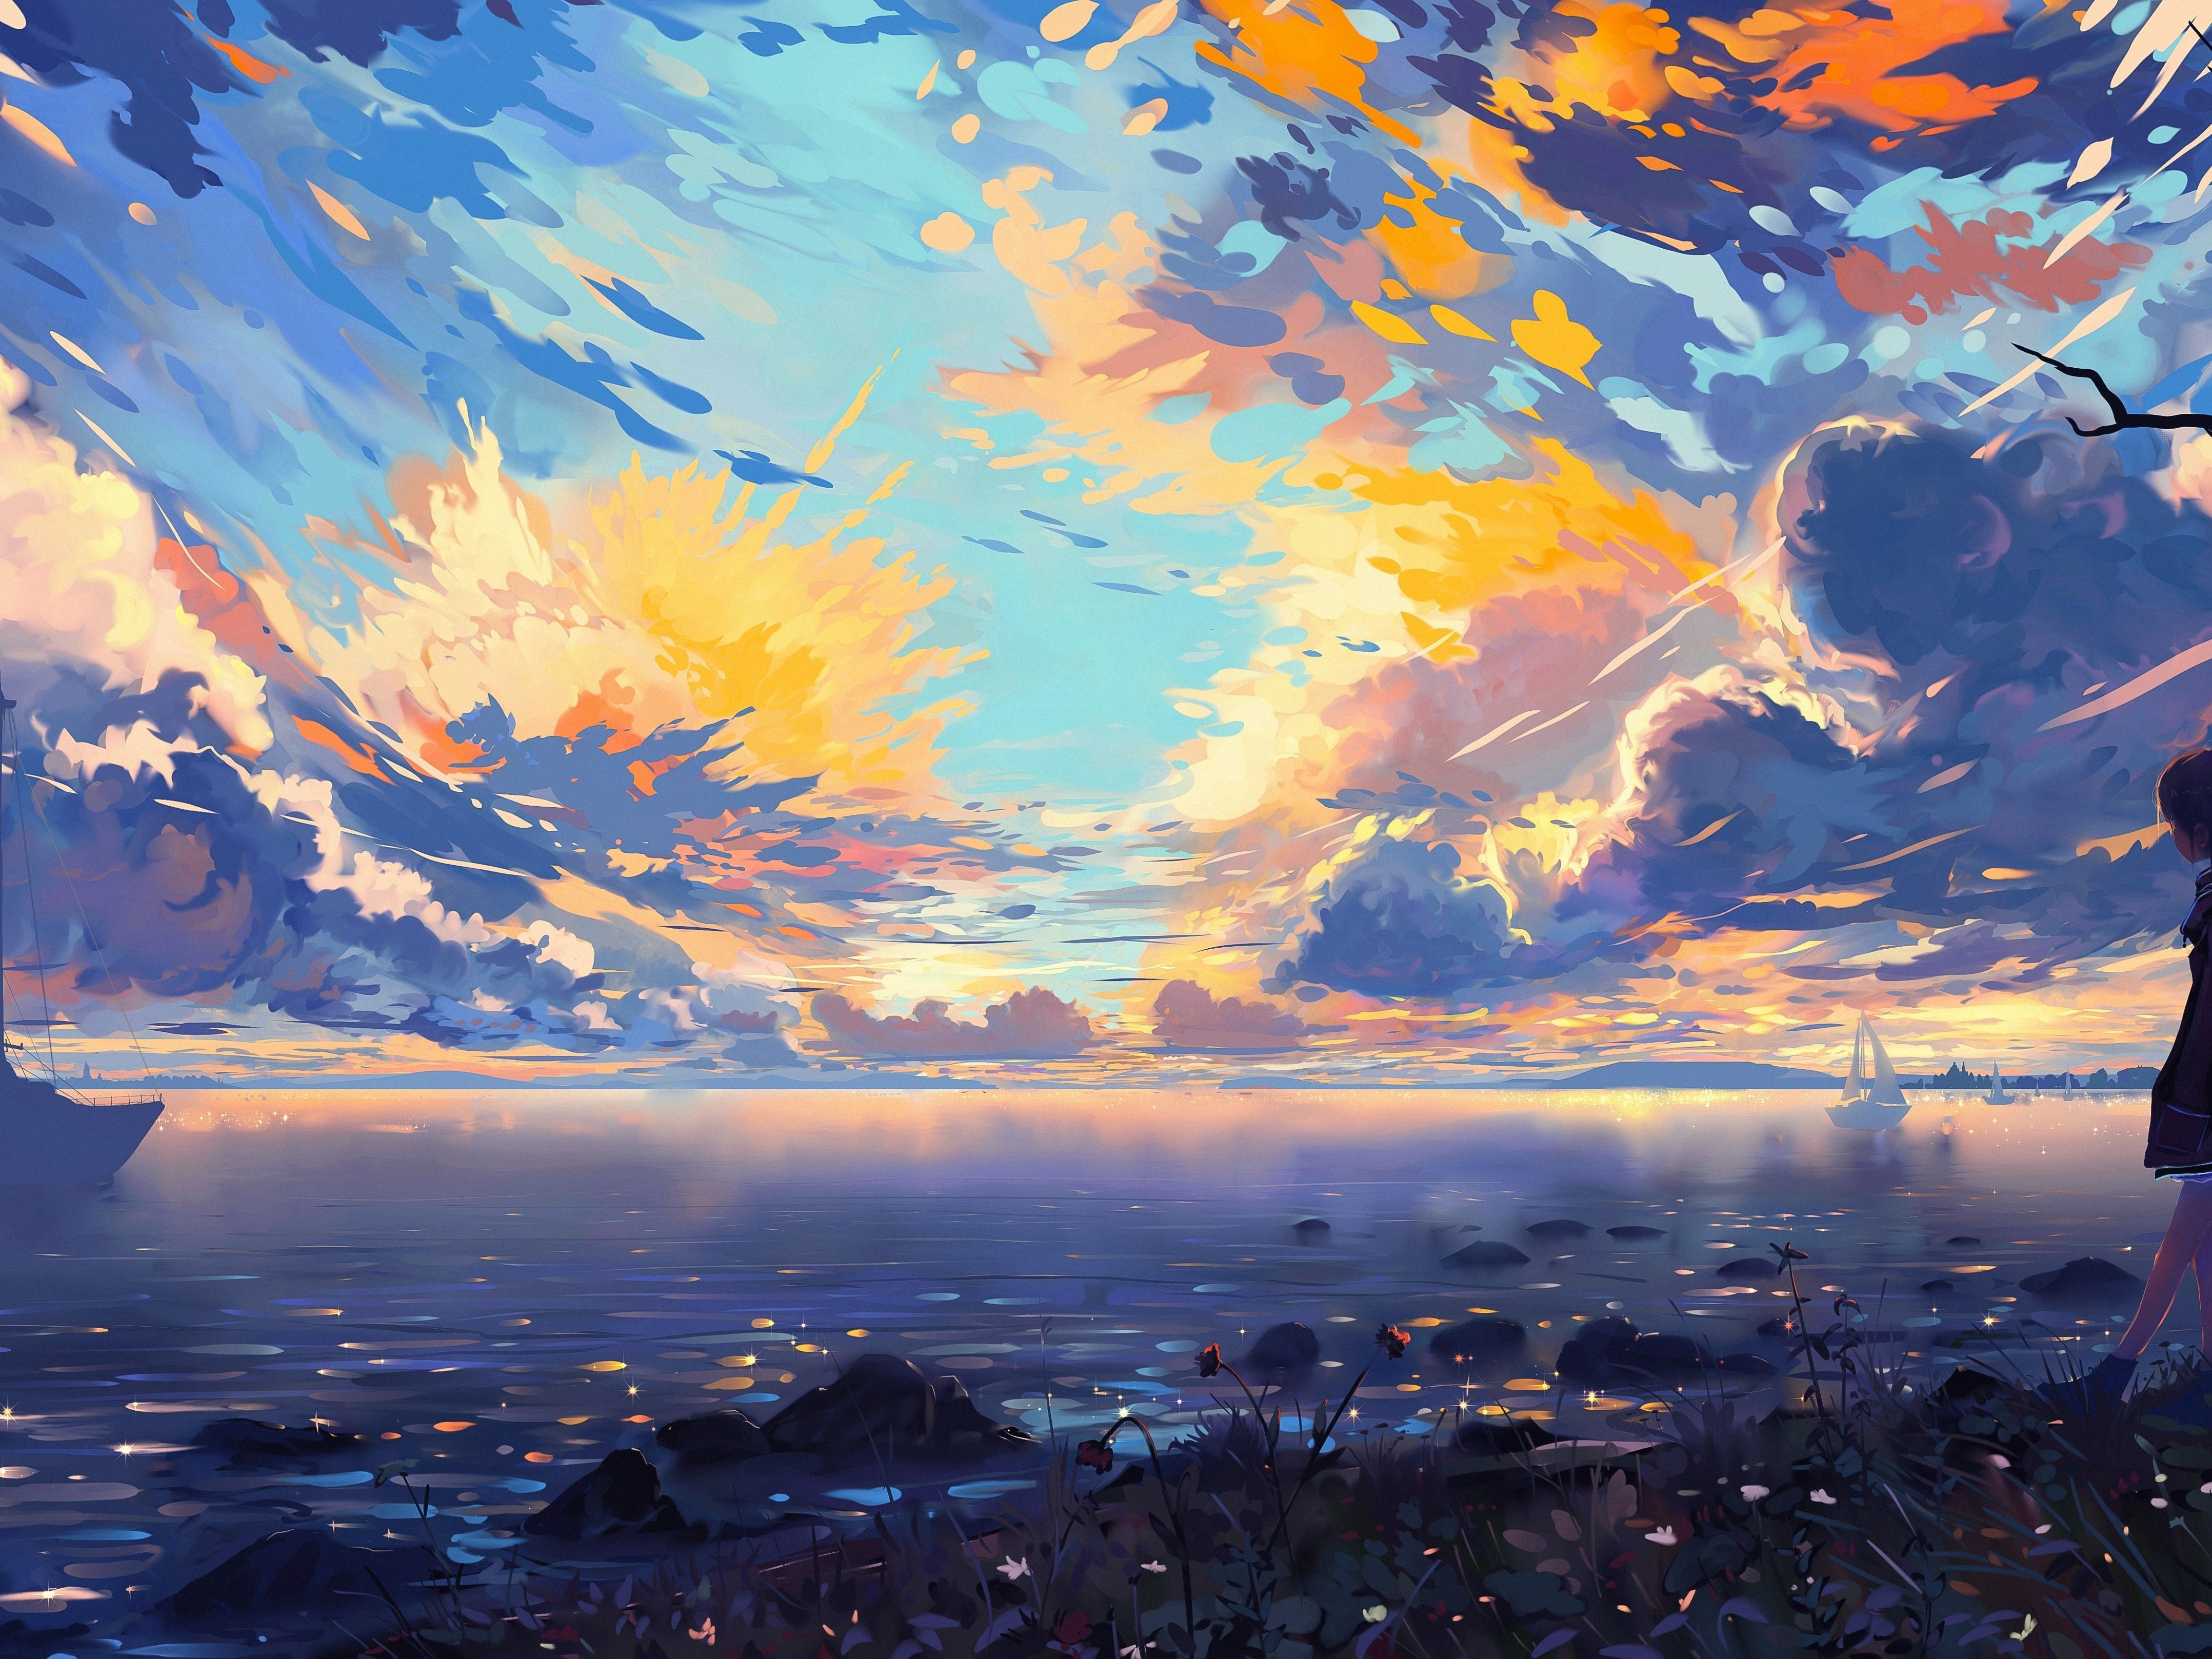 Download 4313x3235 Anime Landscape, Sea, Ships, Colorful, Clouds, Scenic, Tree, Horizon Wallpaper